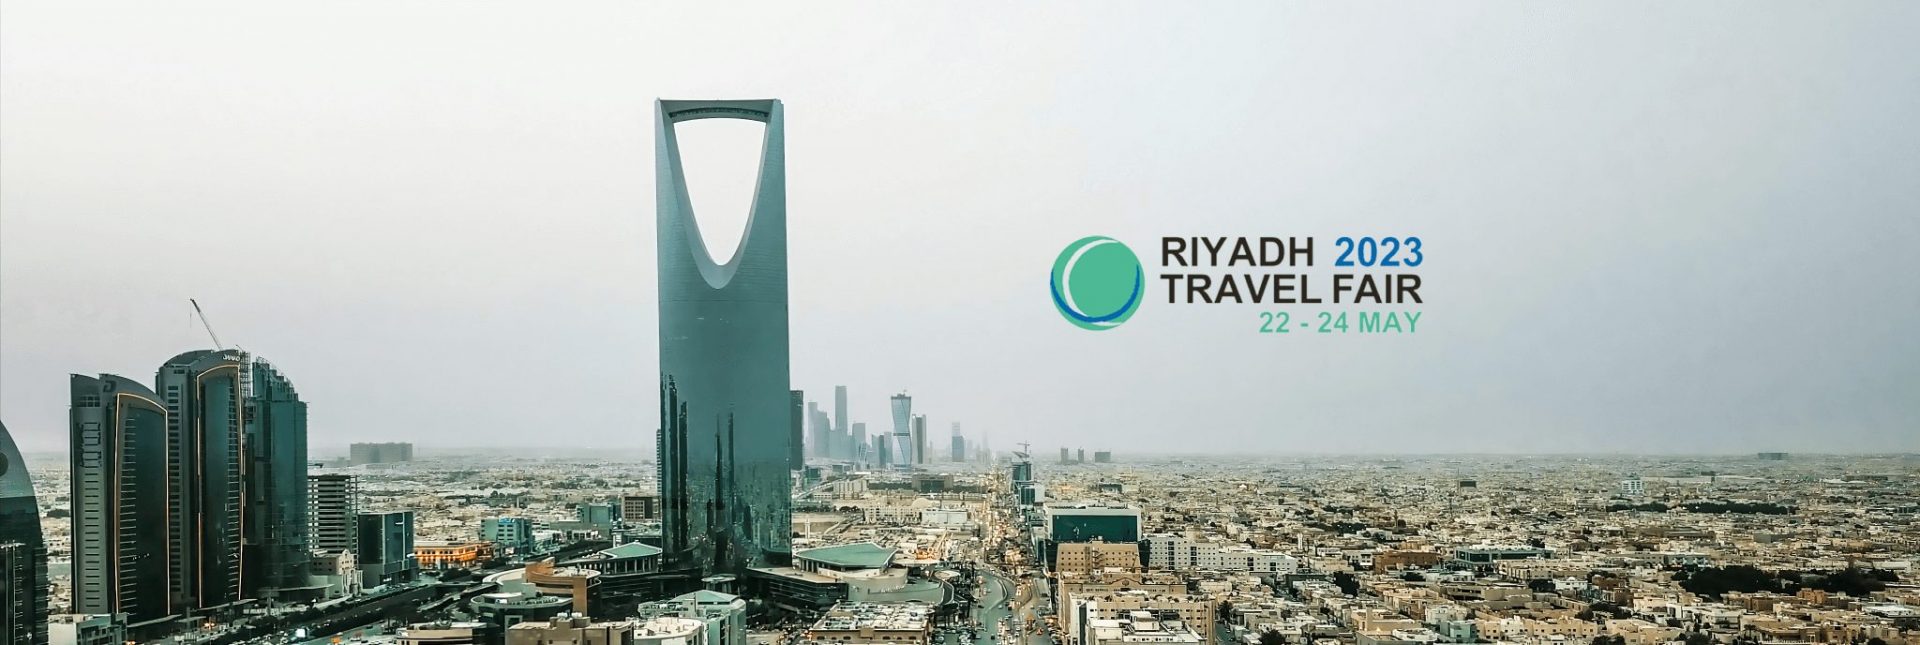 Riyadh travel fair